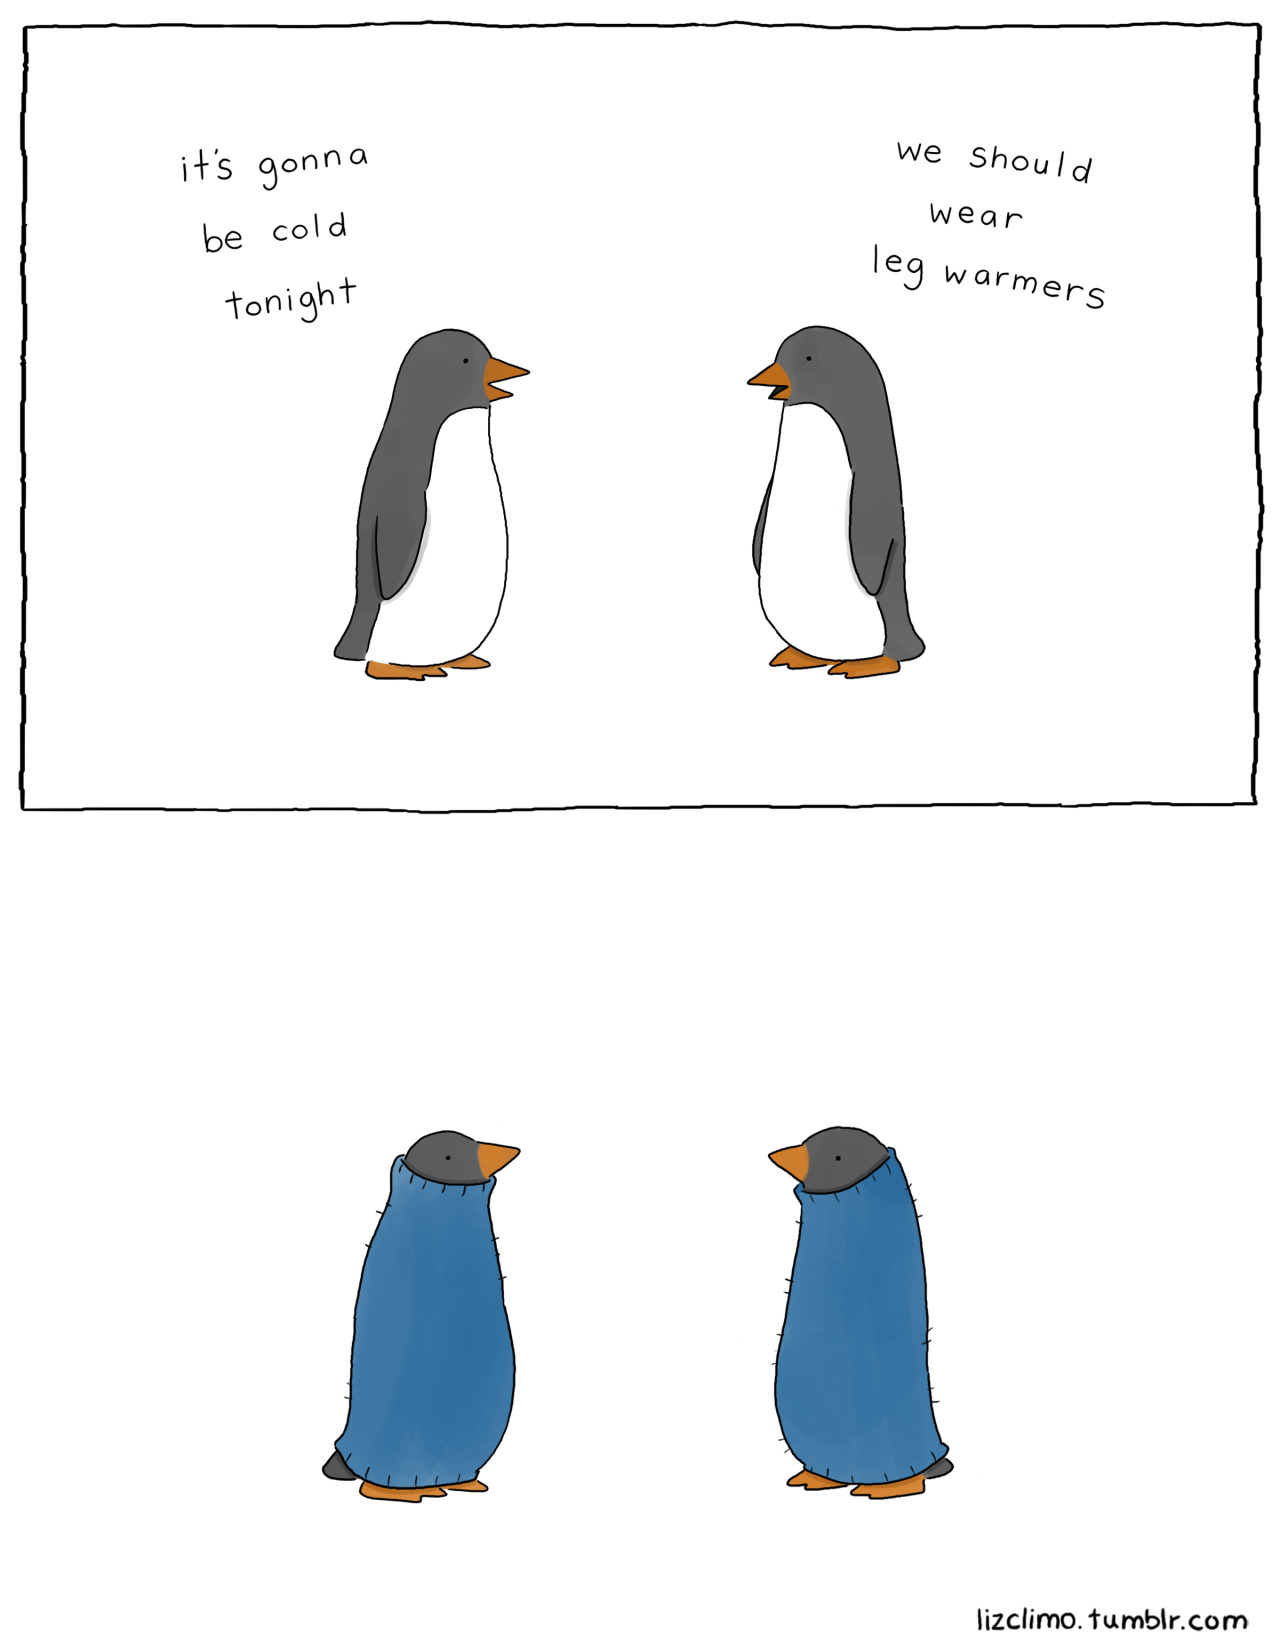 good work penguins 